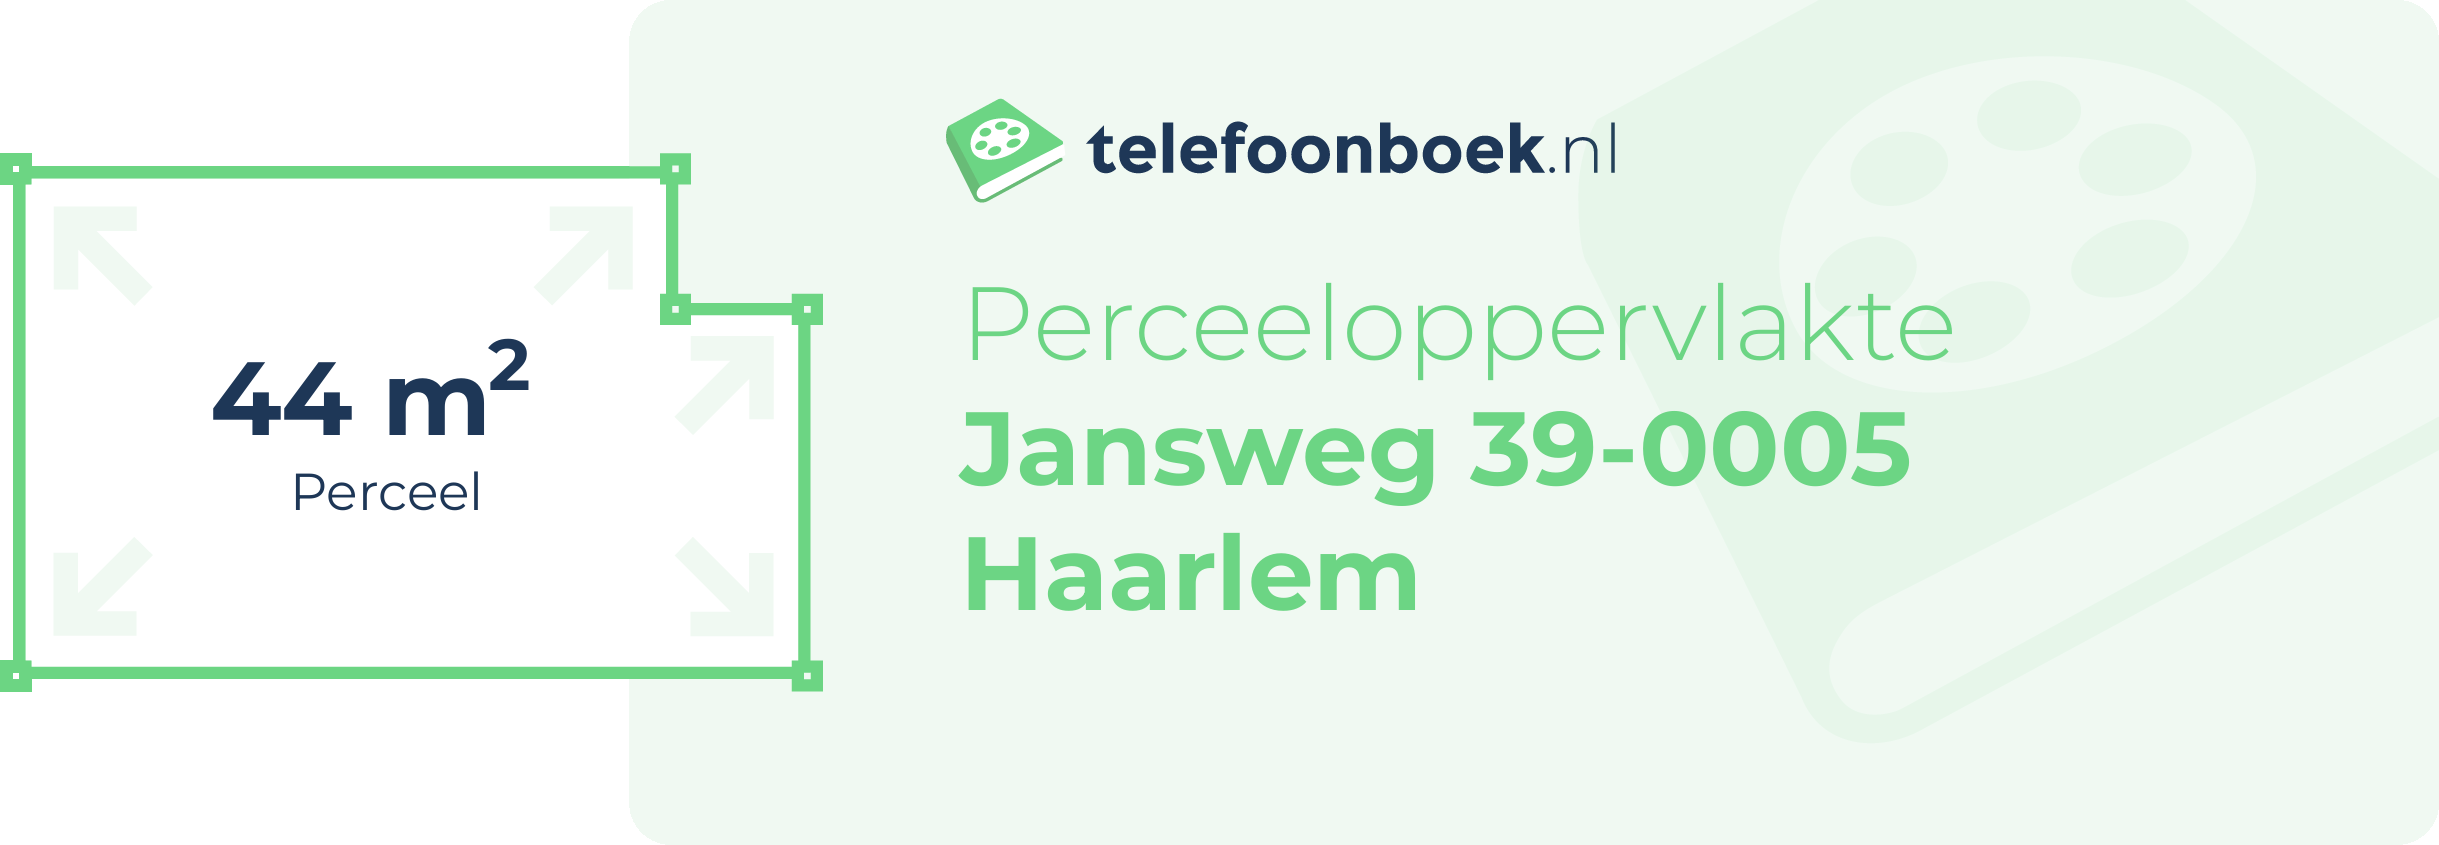 Perceeloppervlakte Jansweg 39-0005 Haarlem